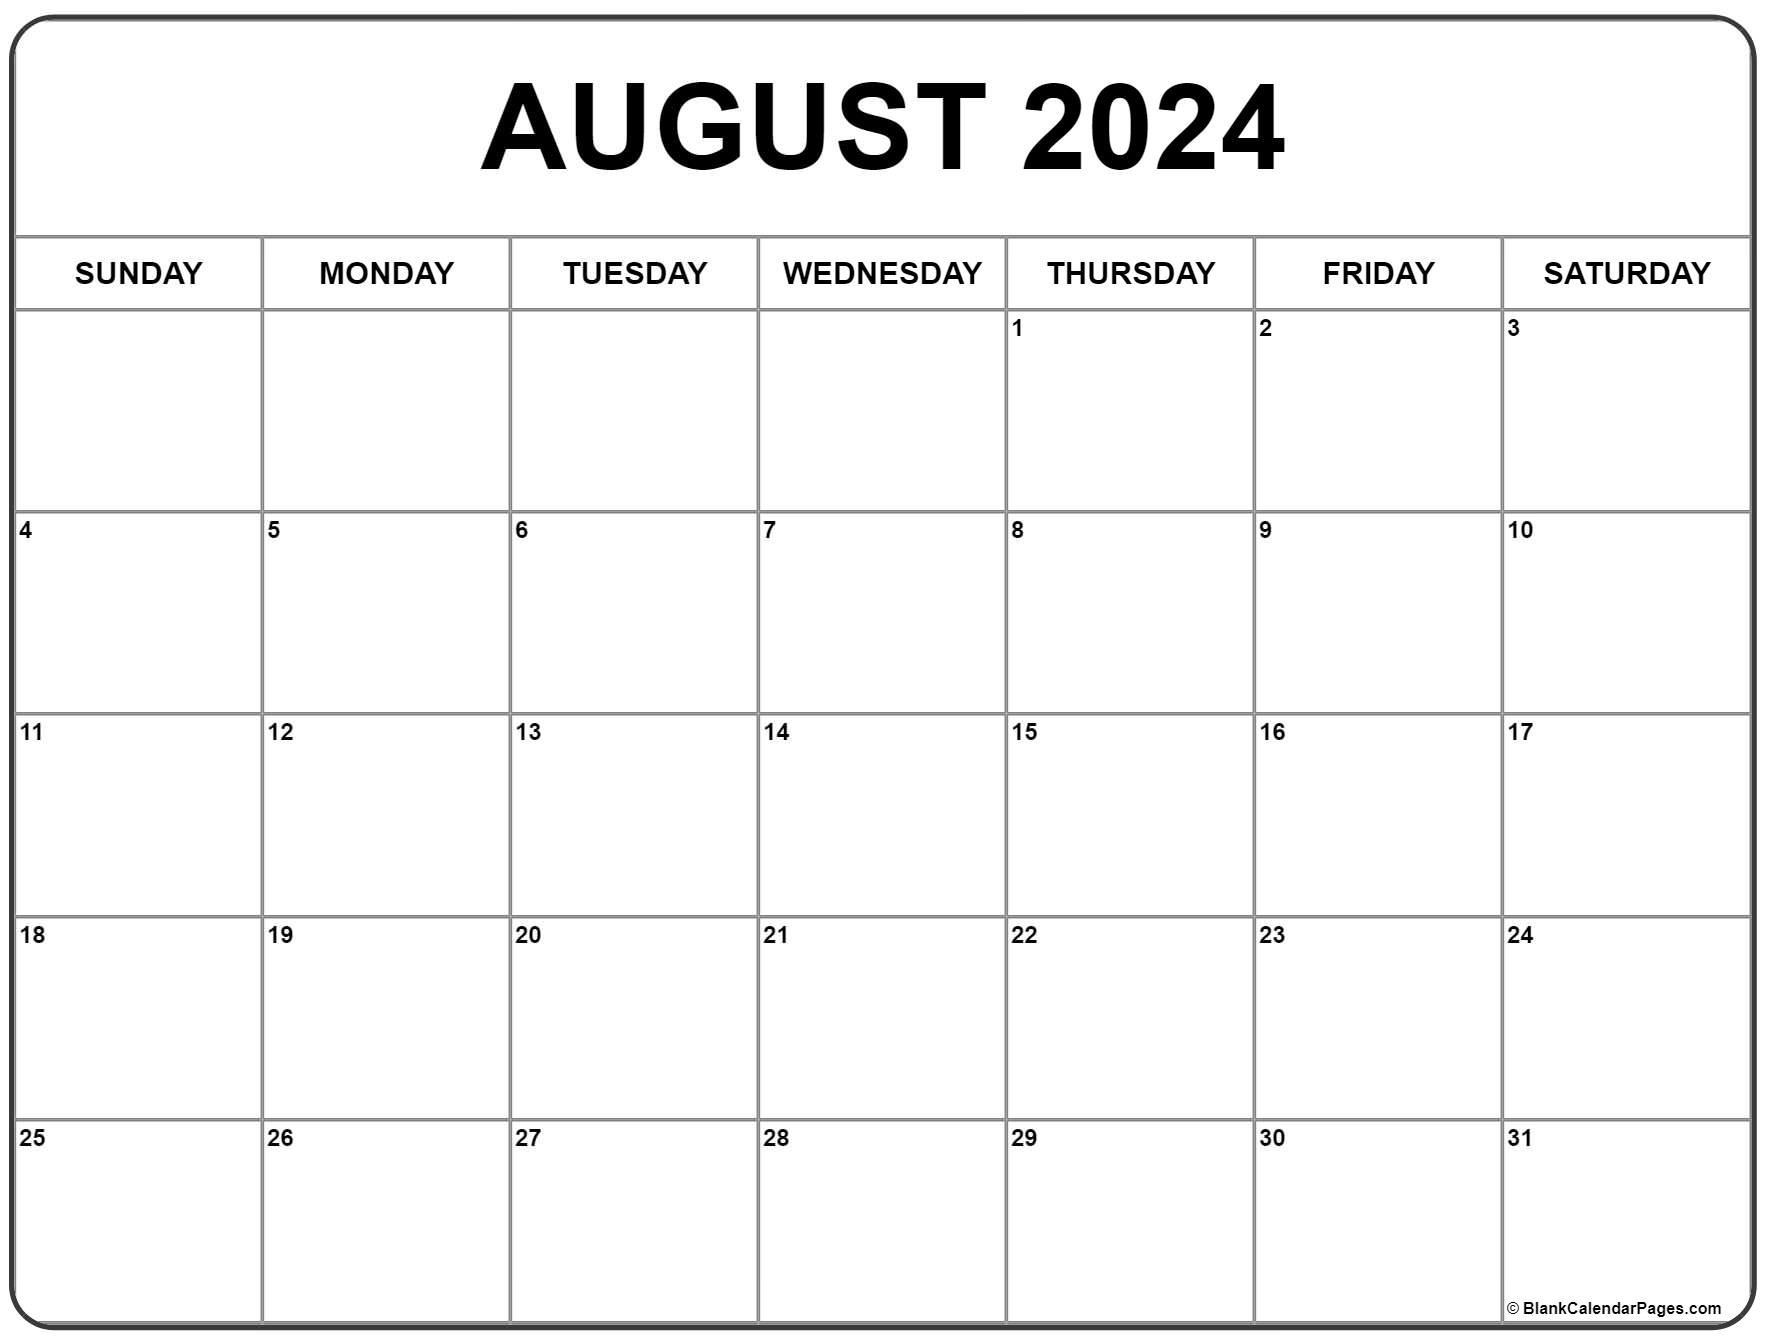 August 2024 Calendar | Free Printable Calendar for Free Printable August Calendar 2024